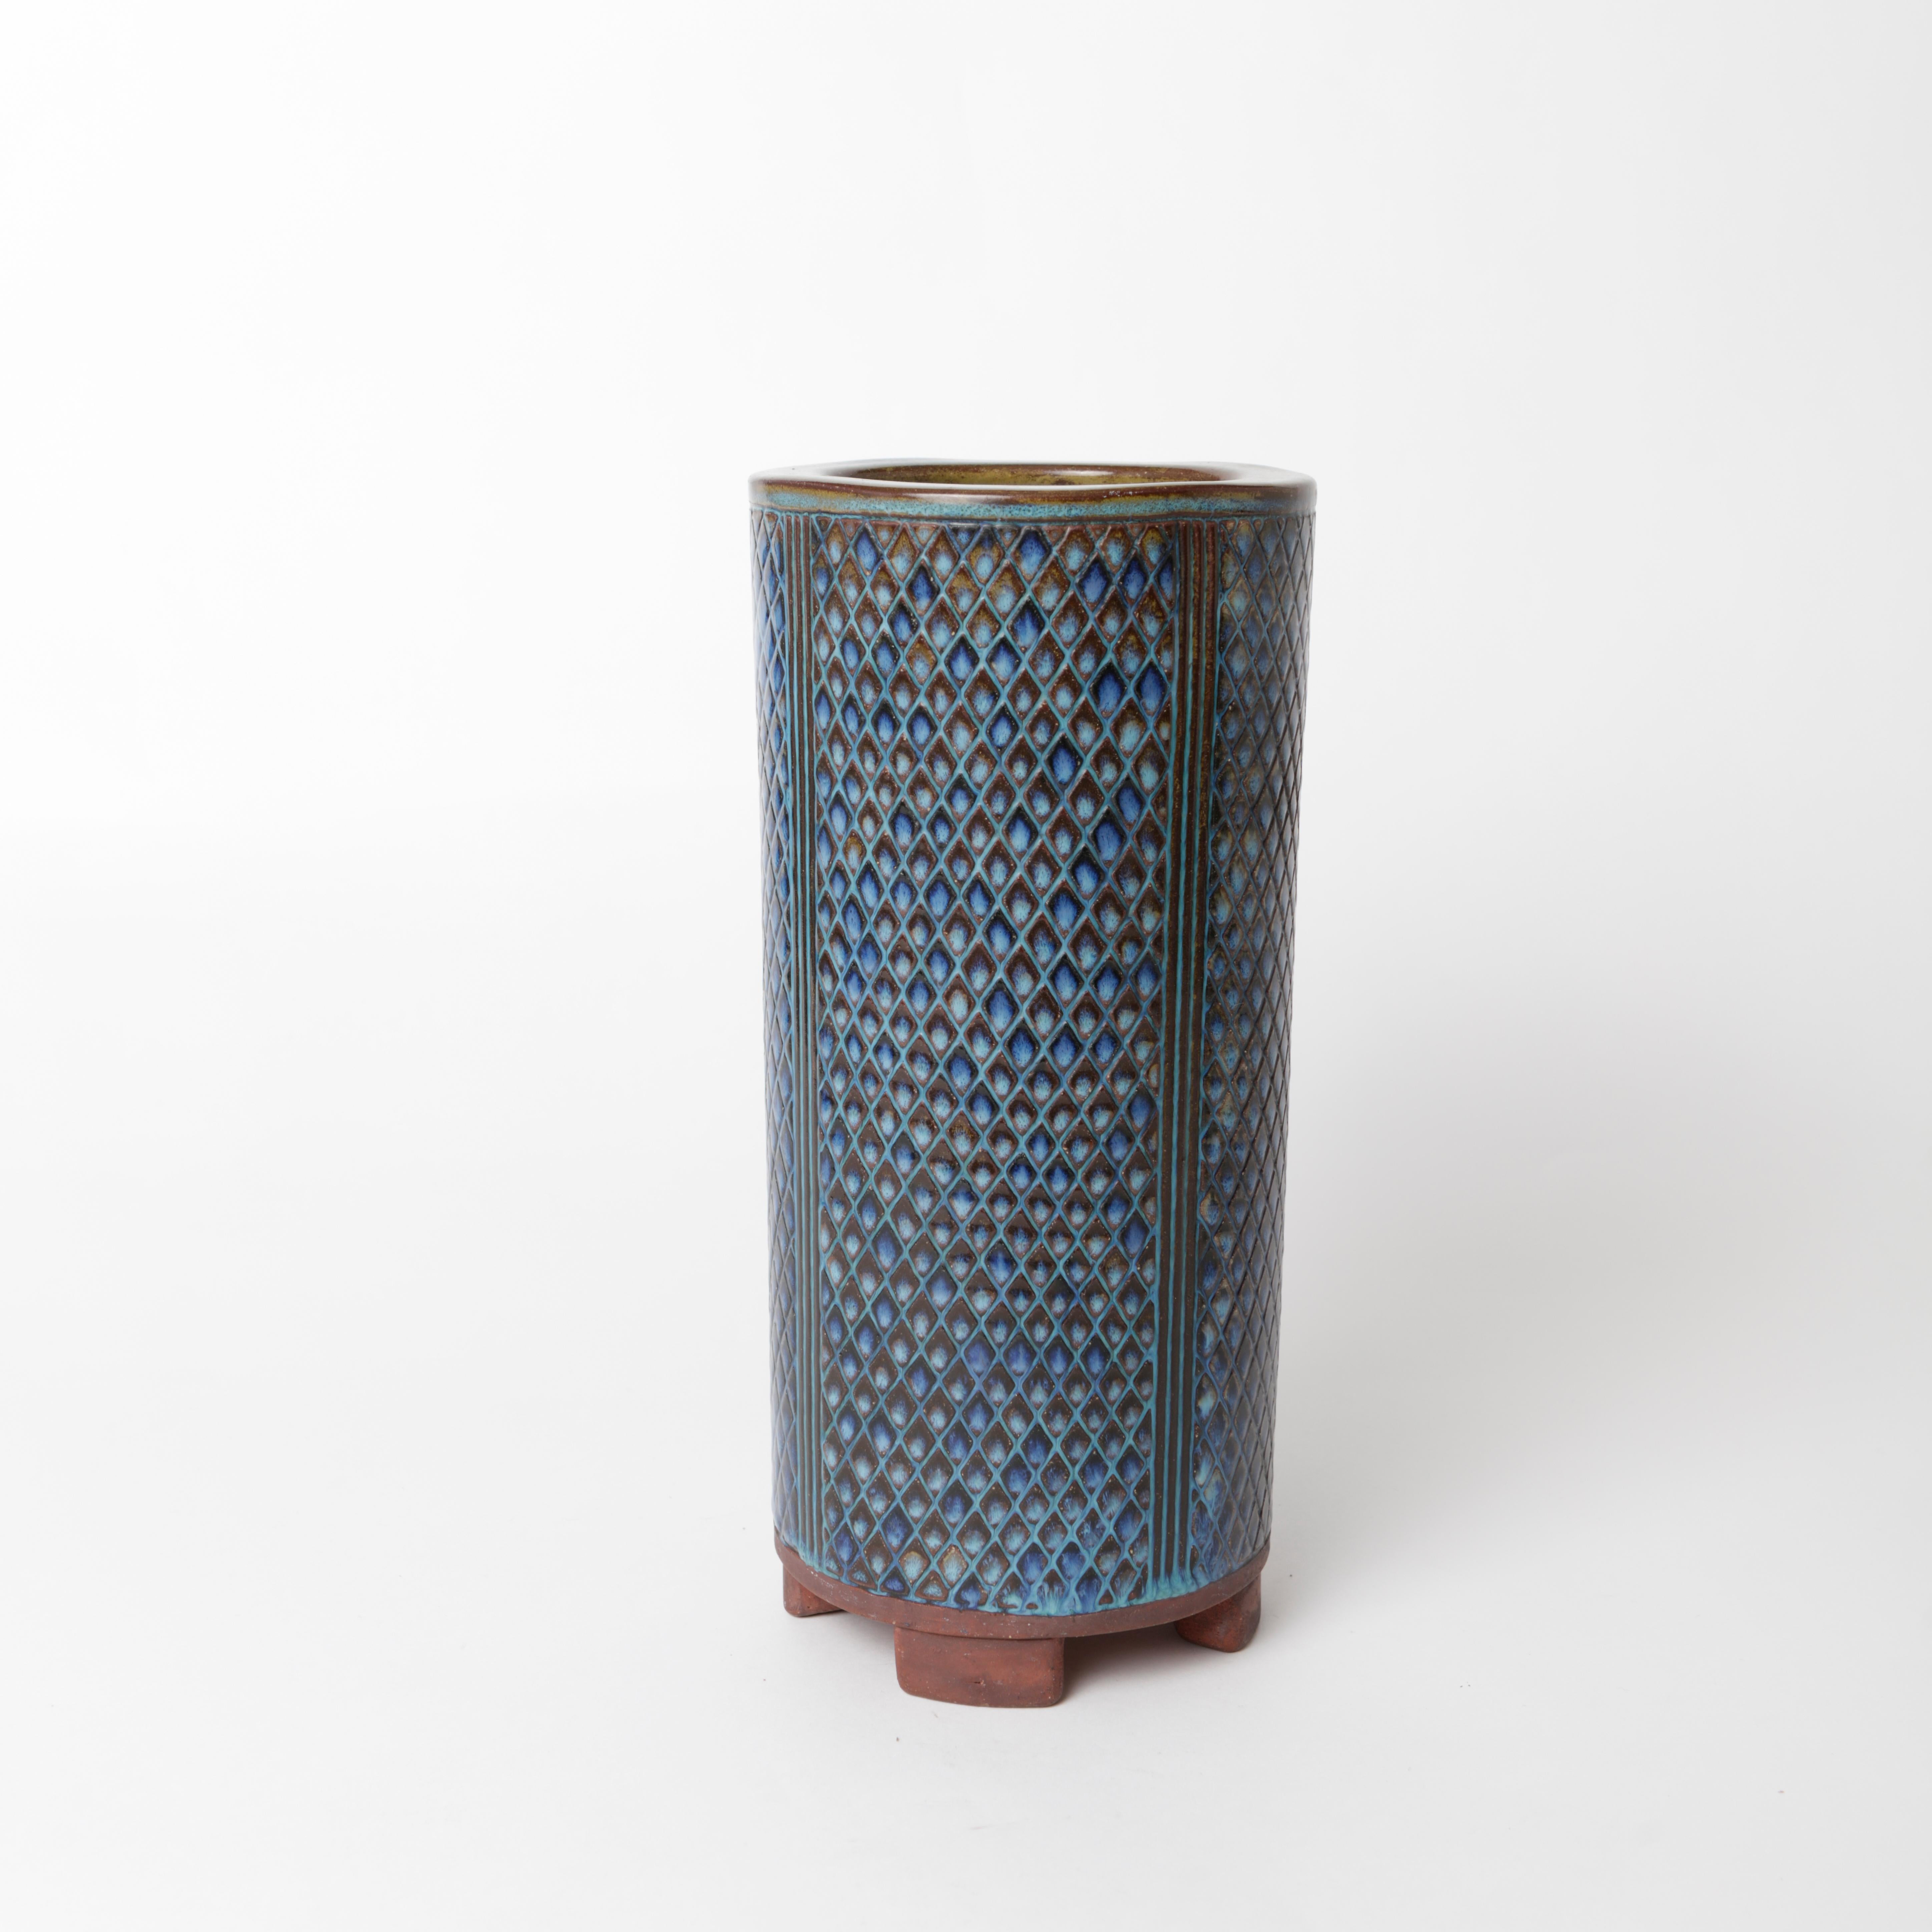 Unique Farsta stoneware vase by Wilhelm Kåge for Gustavsberg in 1956.
Measures: Height 25.5cm/10